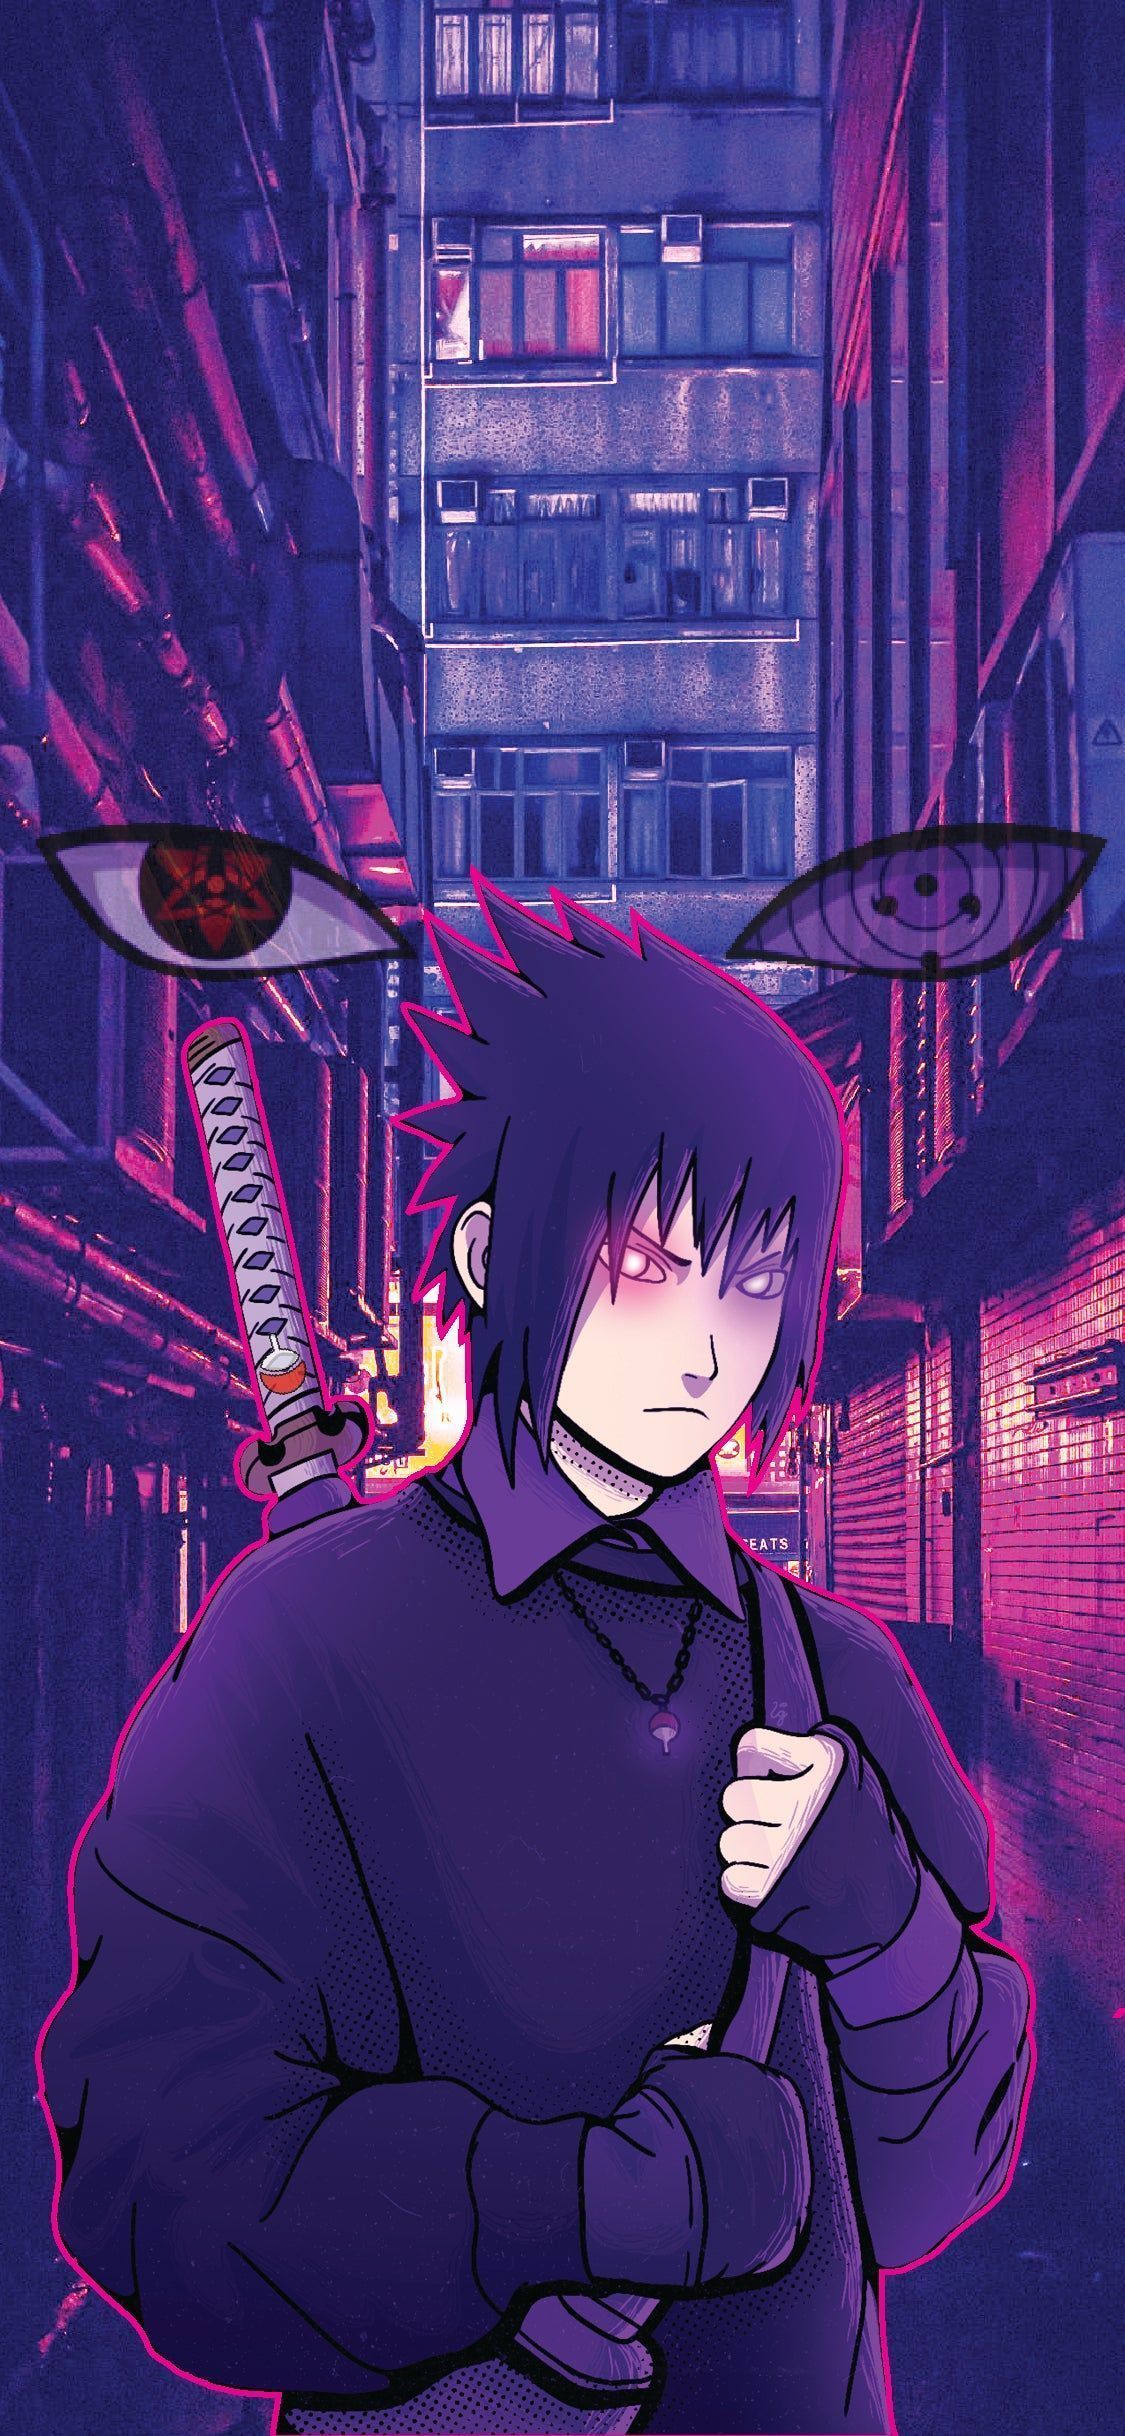 A person with black hair and blue eyes - Sasuke Uchiha